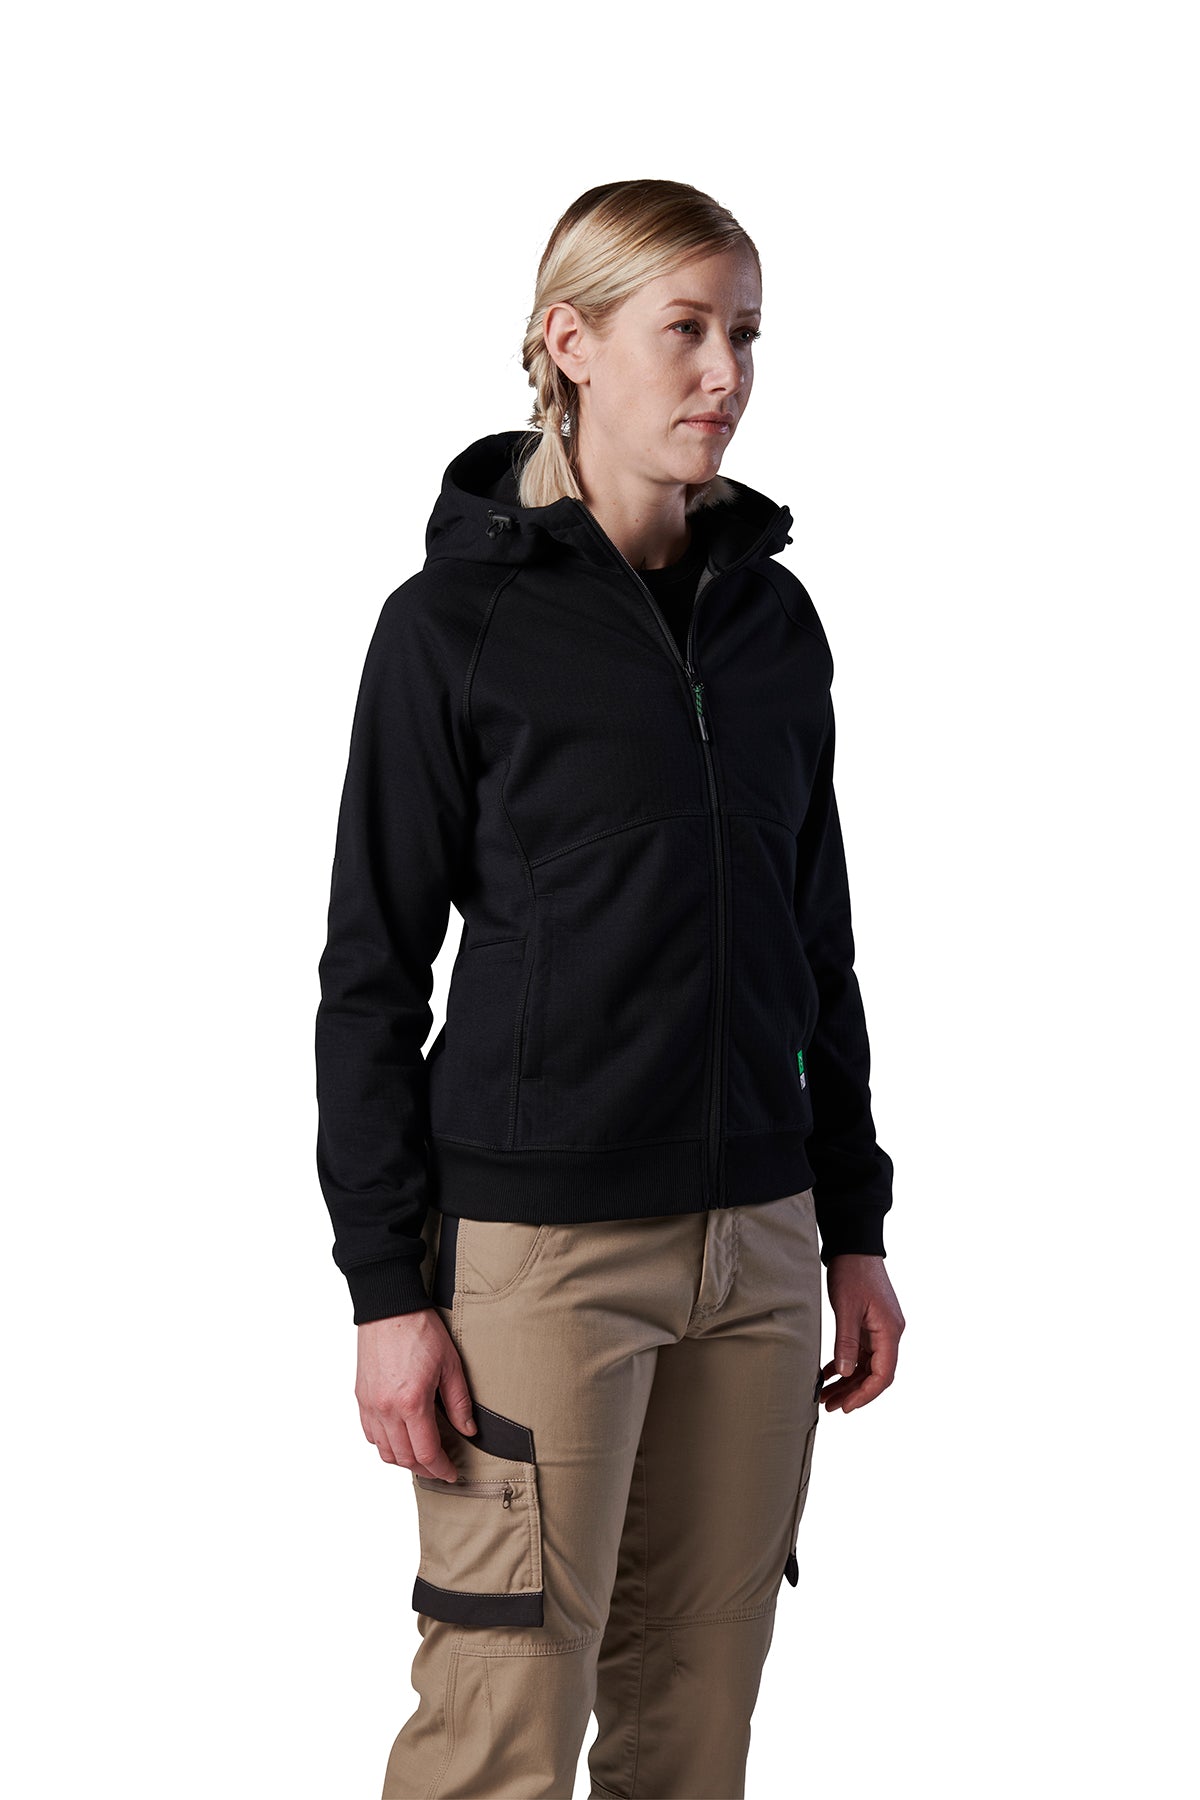 FXD WF-3W Women's Zip Hooded Jacket